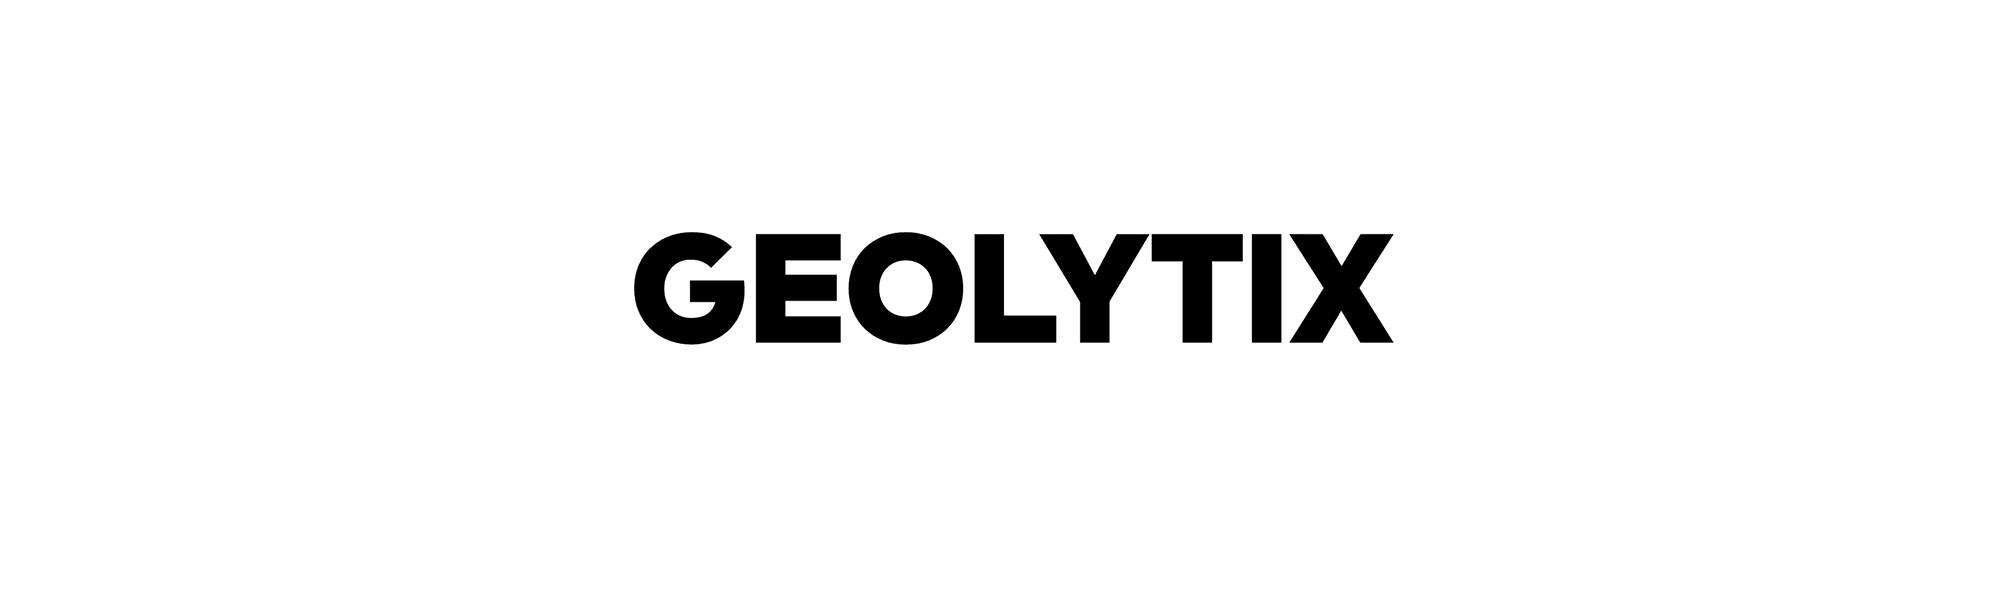 Background Image for Geolytix, Geolytics, Geolytic